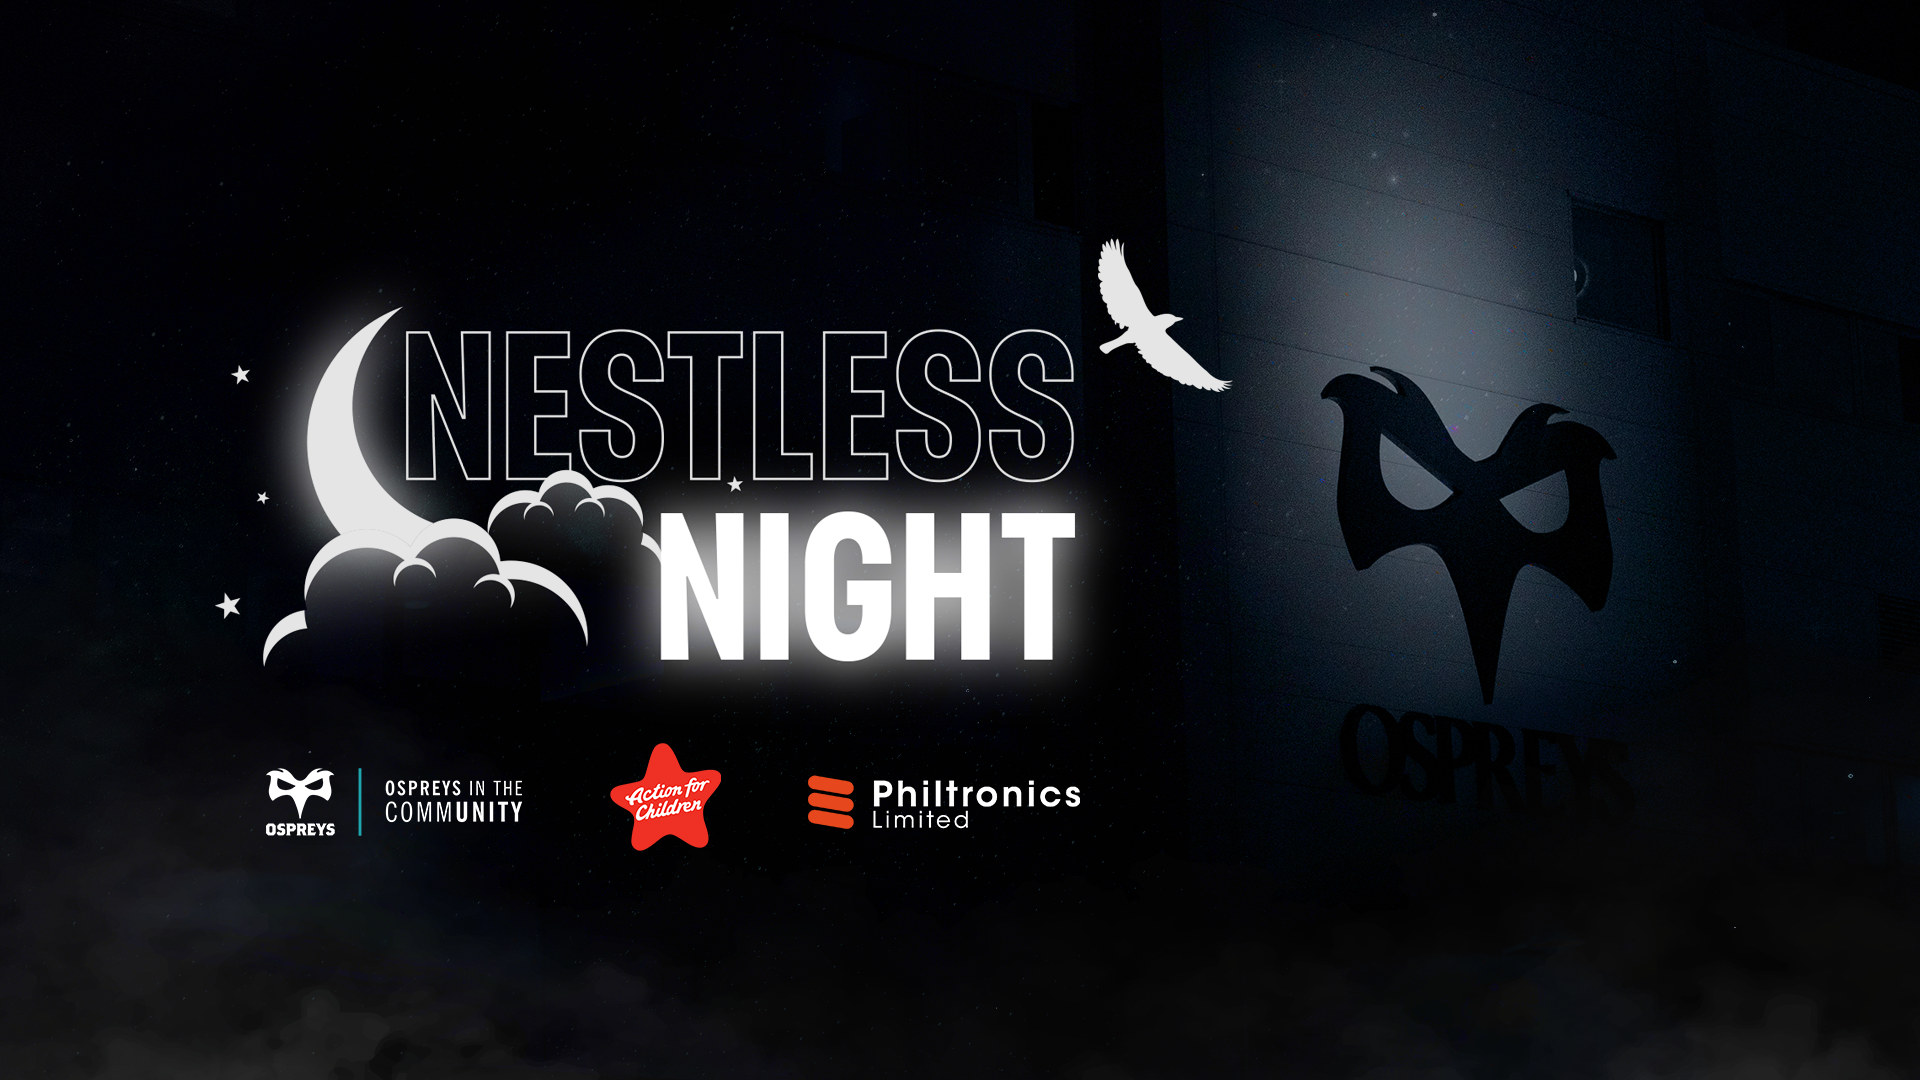 Nestless Night